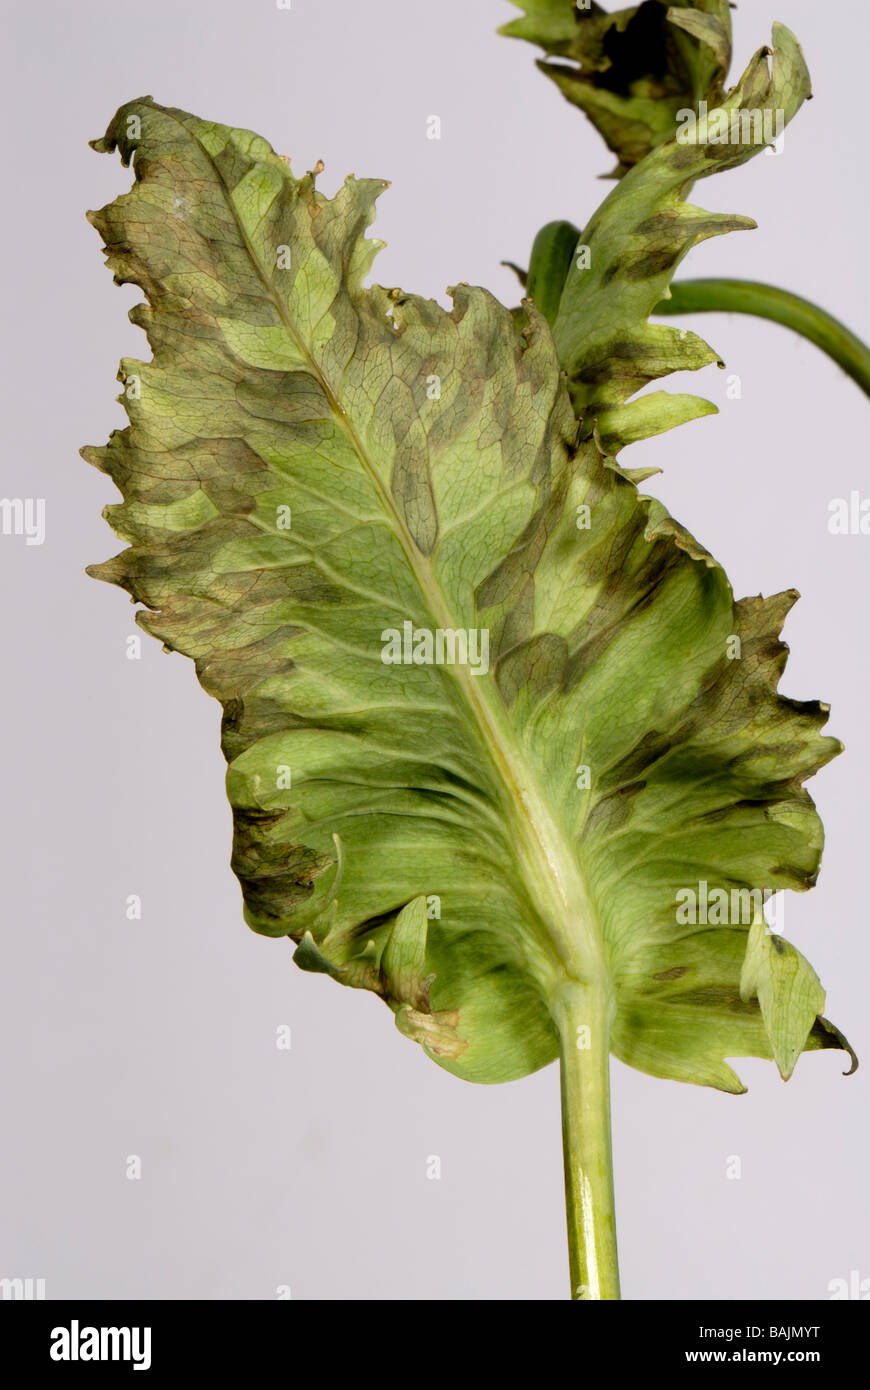 Downy mildew Peronospora arborescens symptoms on opium poppy Papaver somniferum leaves Stock Photo